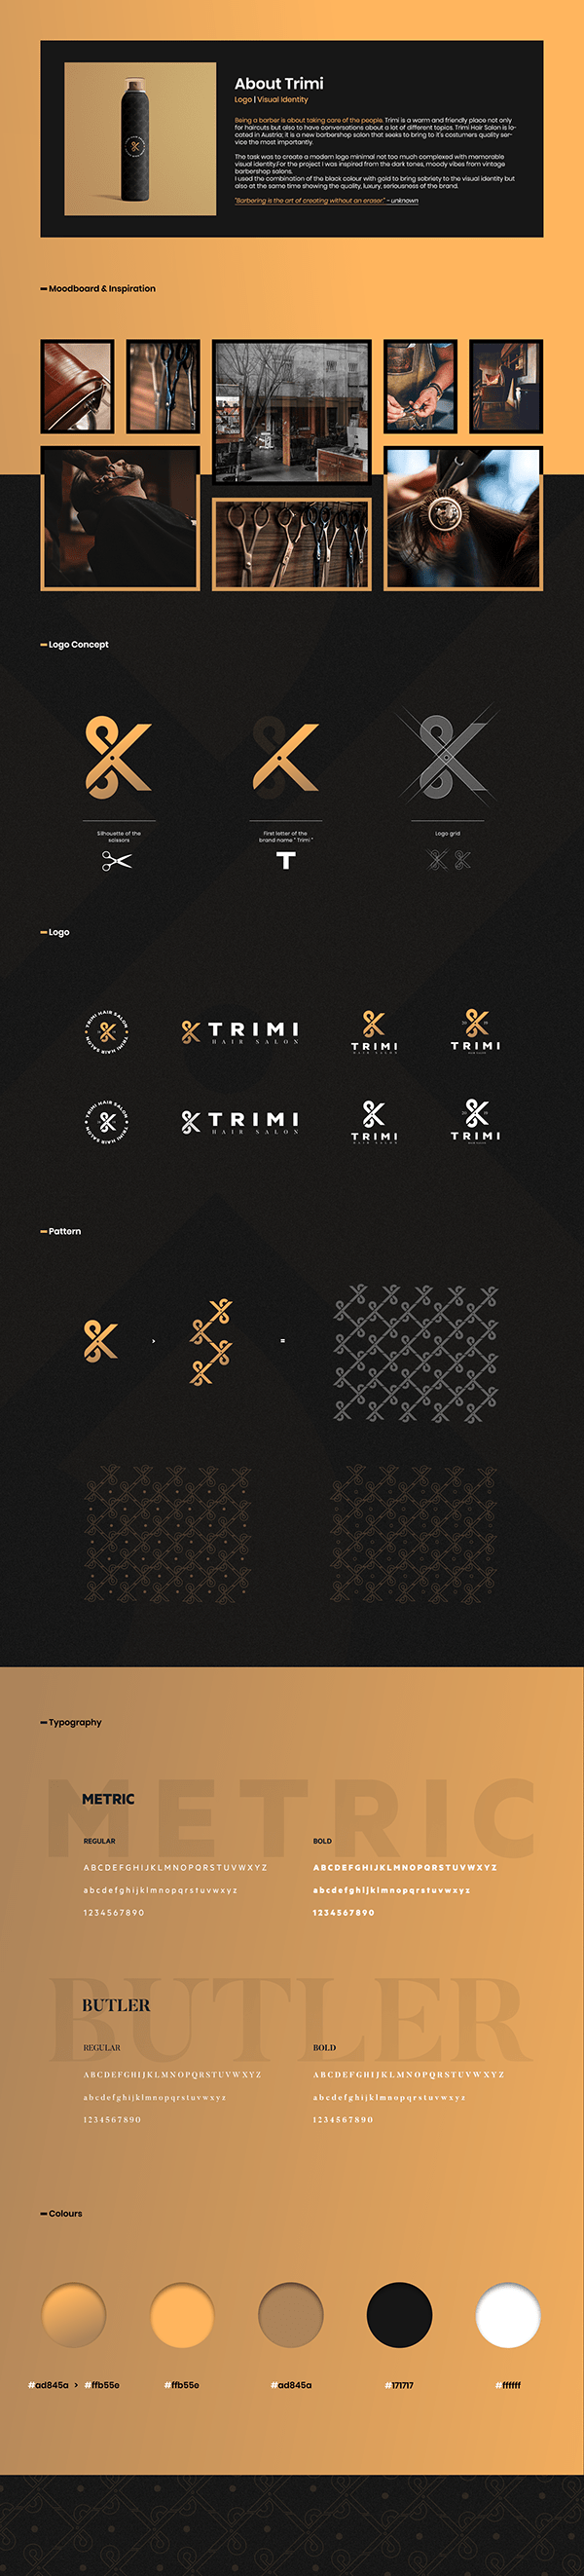 TRIMI HAIR SALON | Logo & Visual Identity